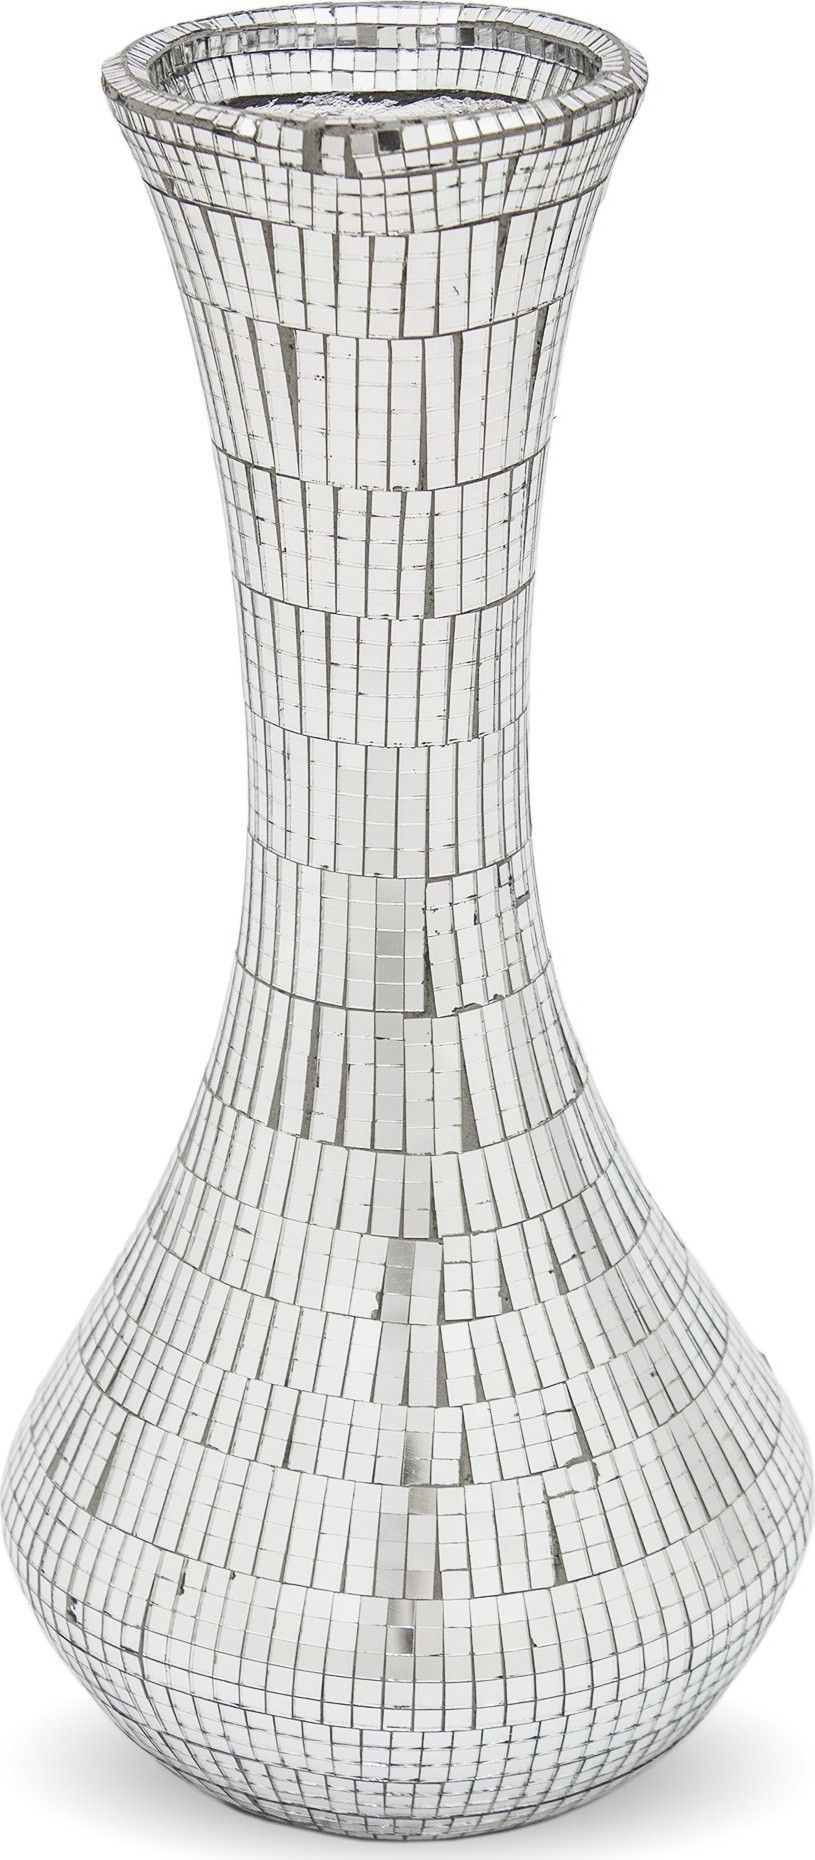 Váza se stříbrnou mozaikou 111900 - M DUM.cz